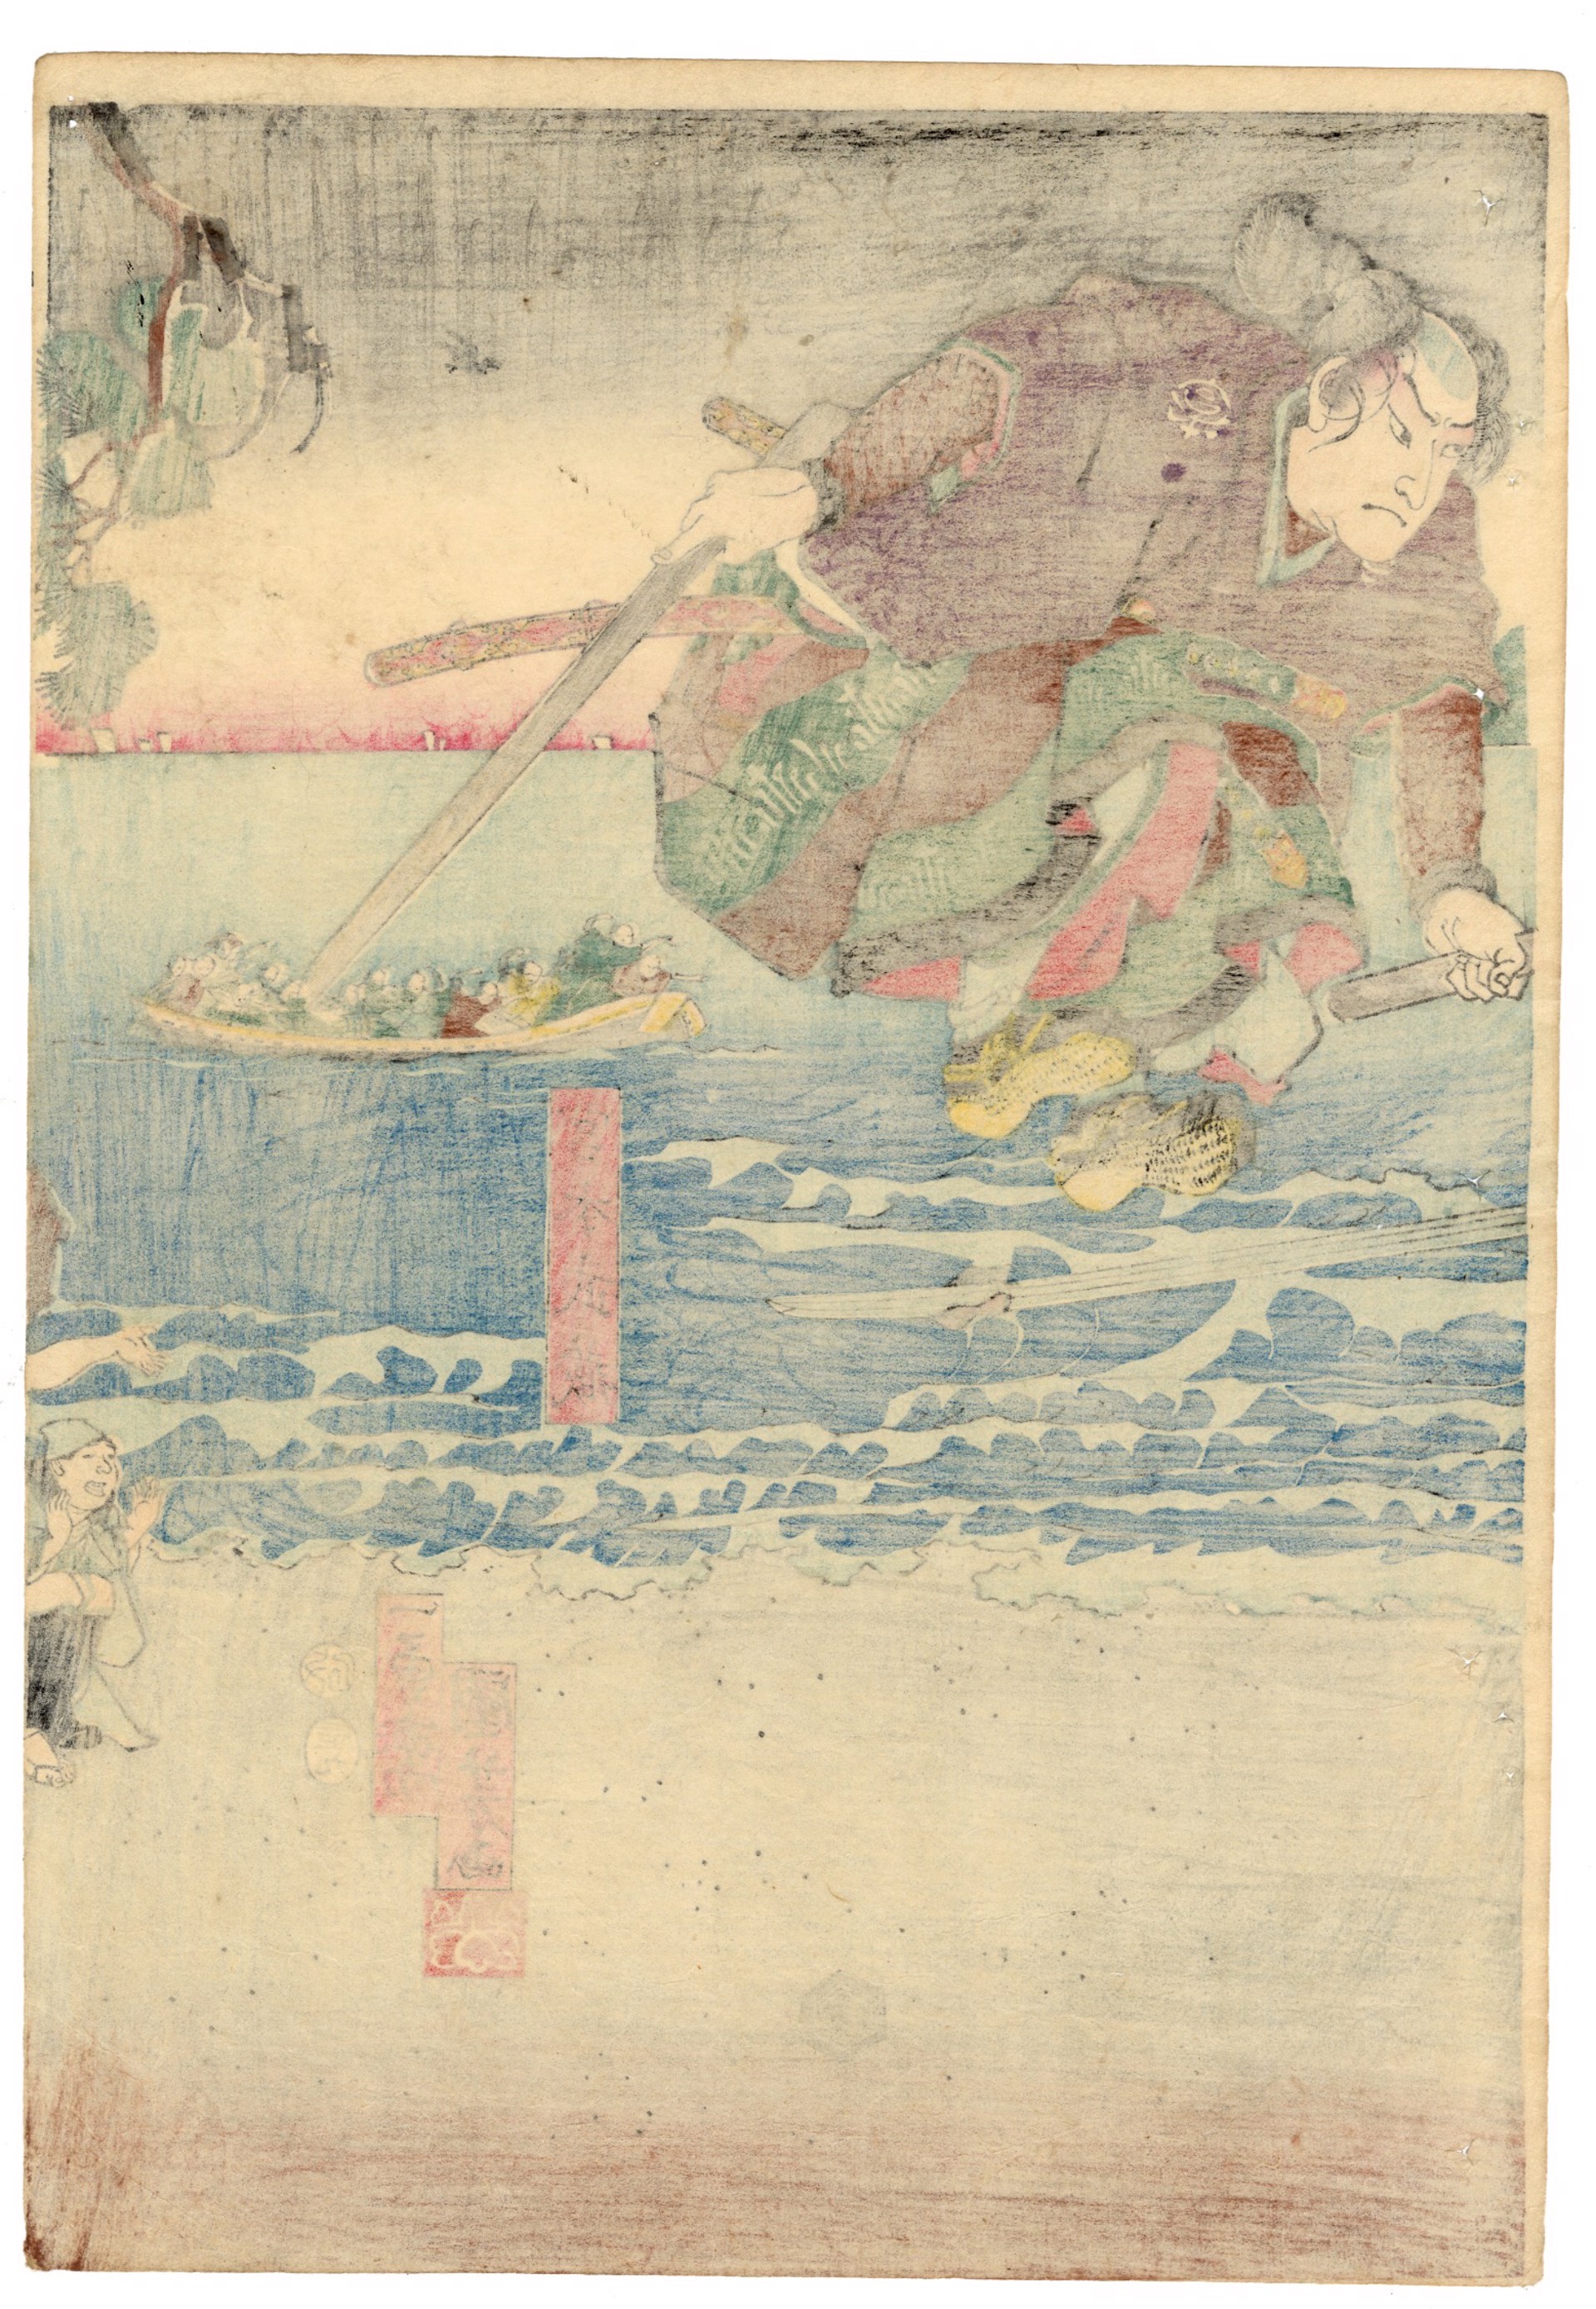 Miyamoto Musashi, fencing with two sticks, makes a leap as he fights the villain Sasaki Ganryû by Kuniyoshi